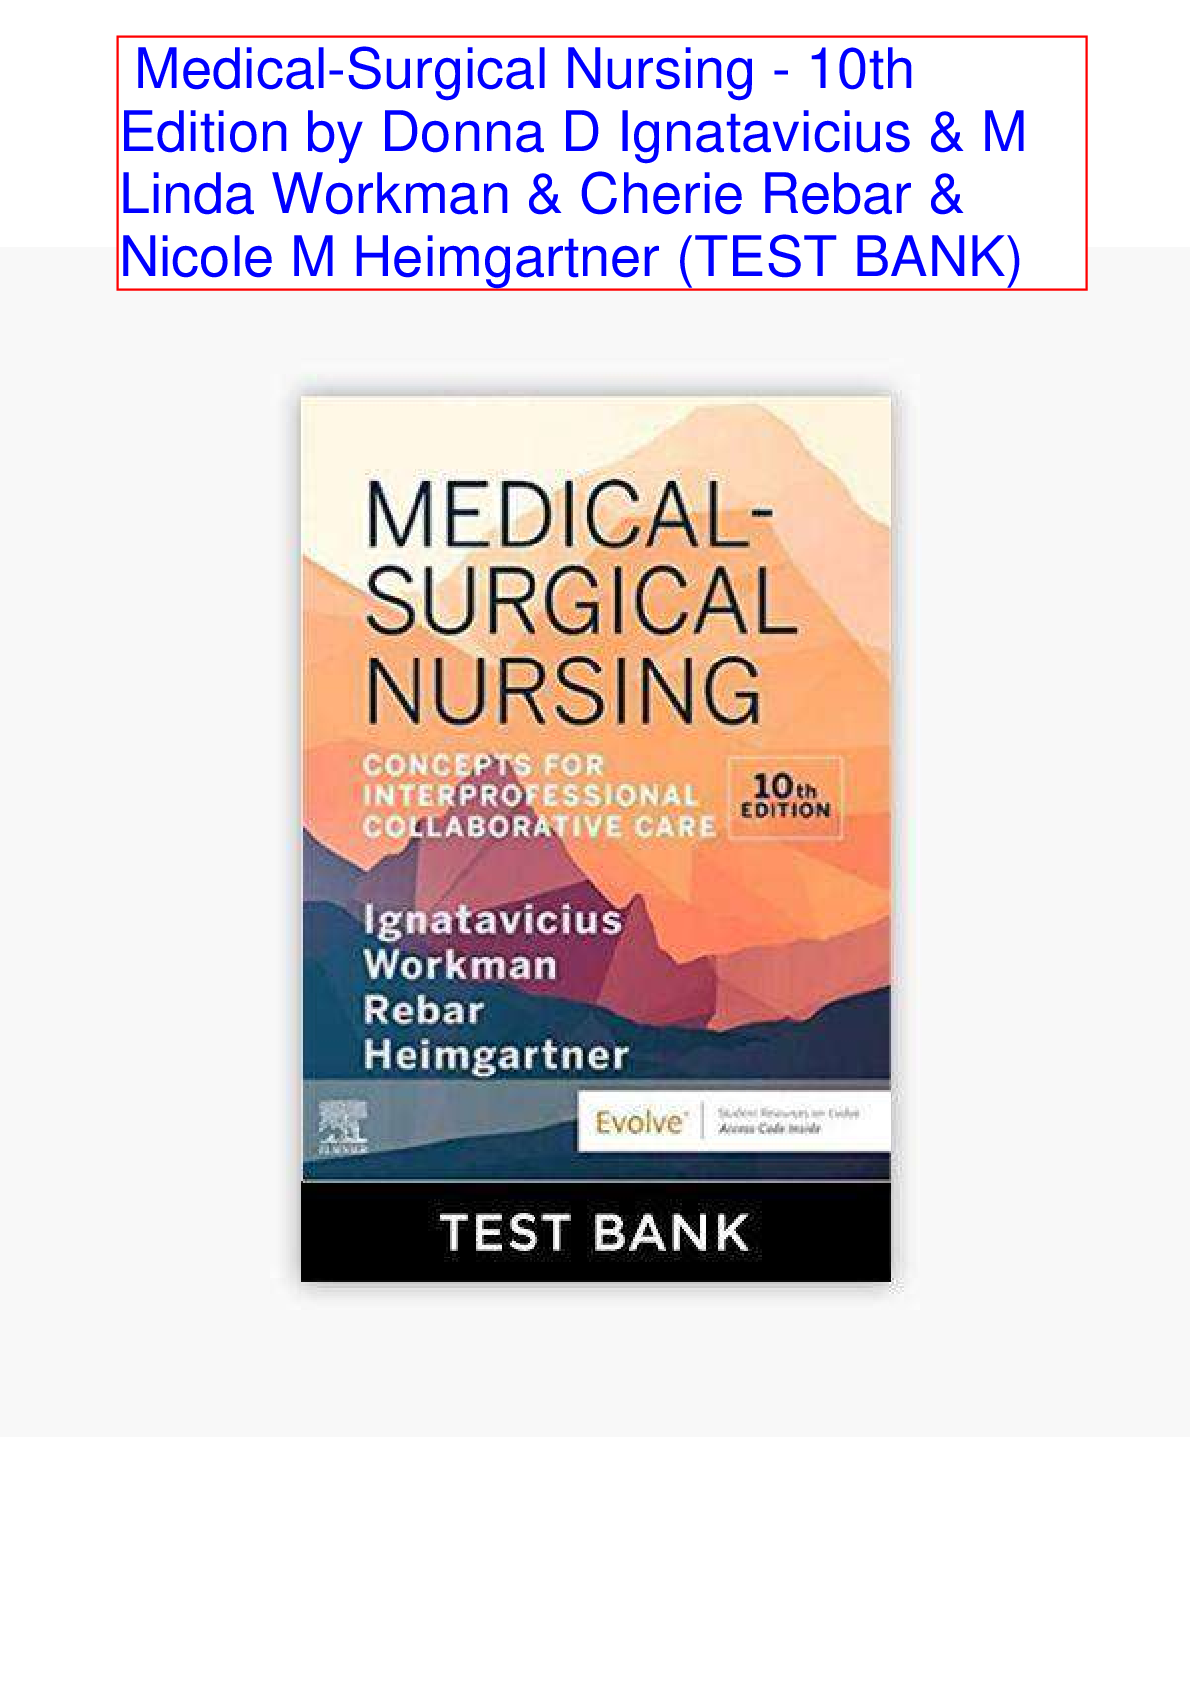 Medical-Surgical Nursing - 10th Edition by Donna D Ignatavicius & M Linda Workman & Cherie Rebar & Nicole M Heimgartner.png